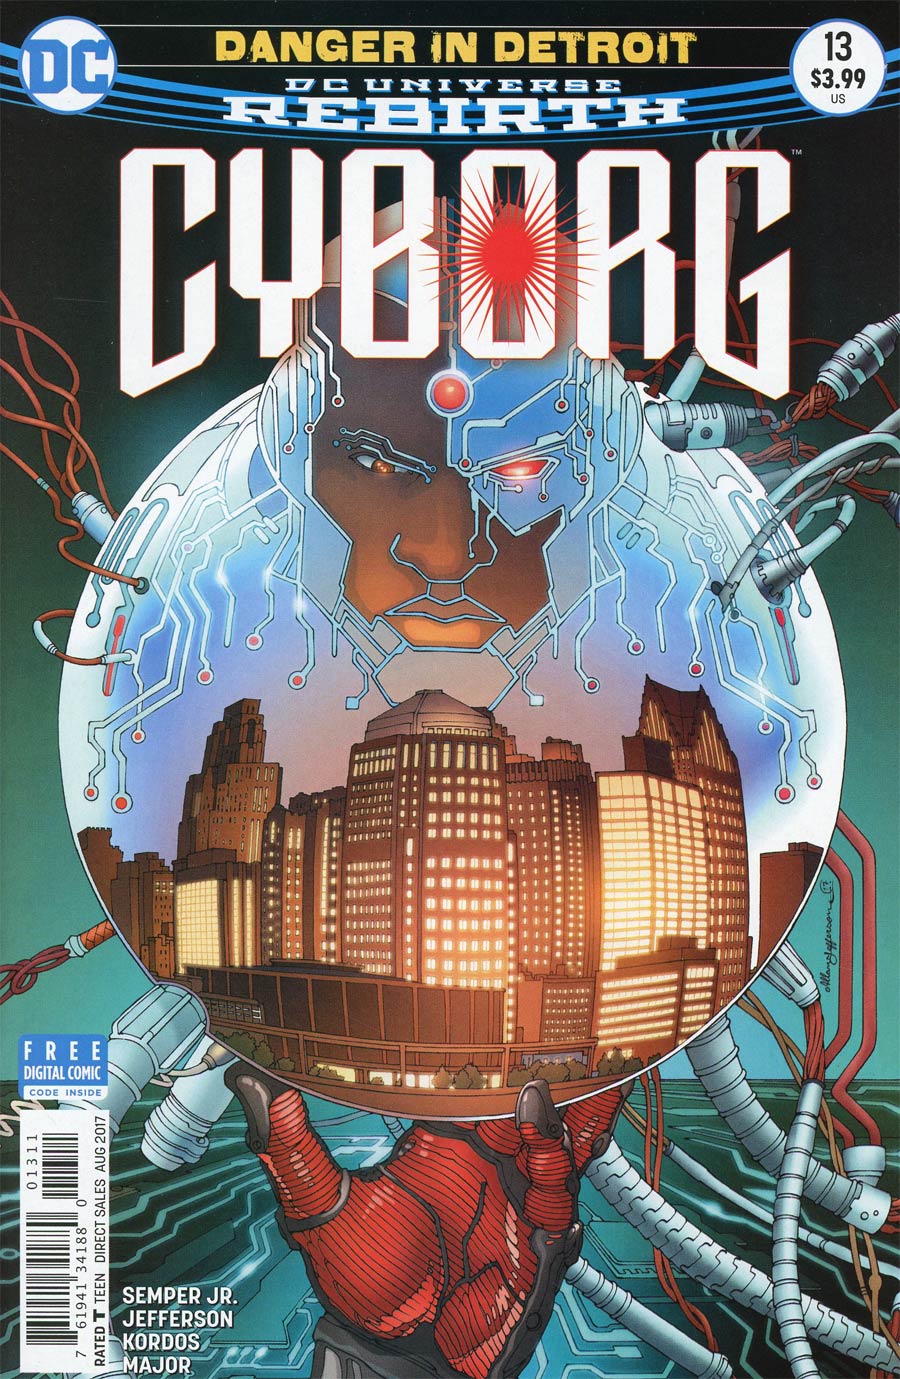 Cyborg Vol 2 #13 Cover A Regular Allan Jefferson Cover